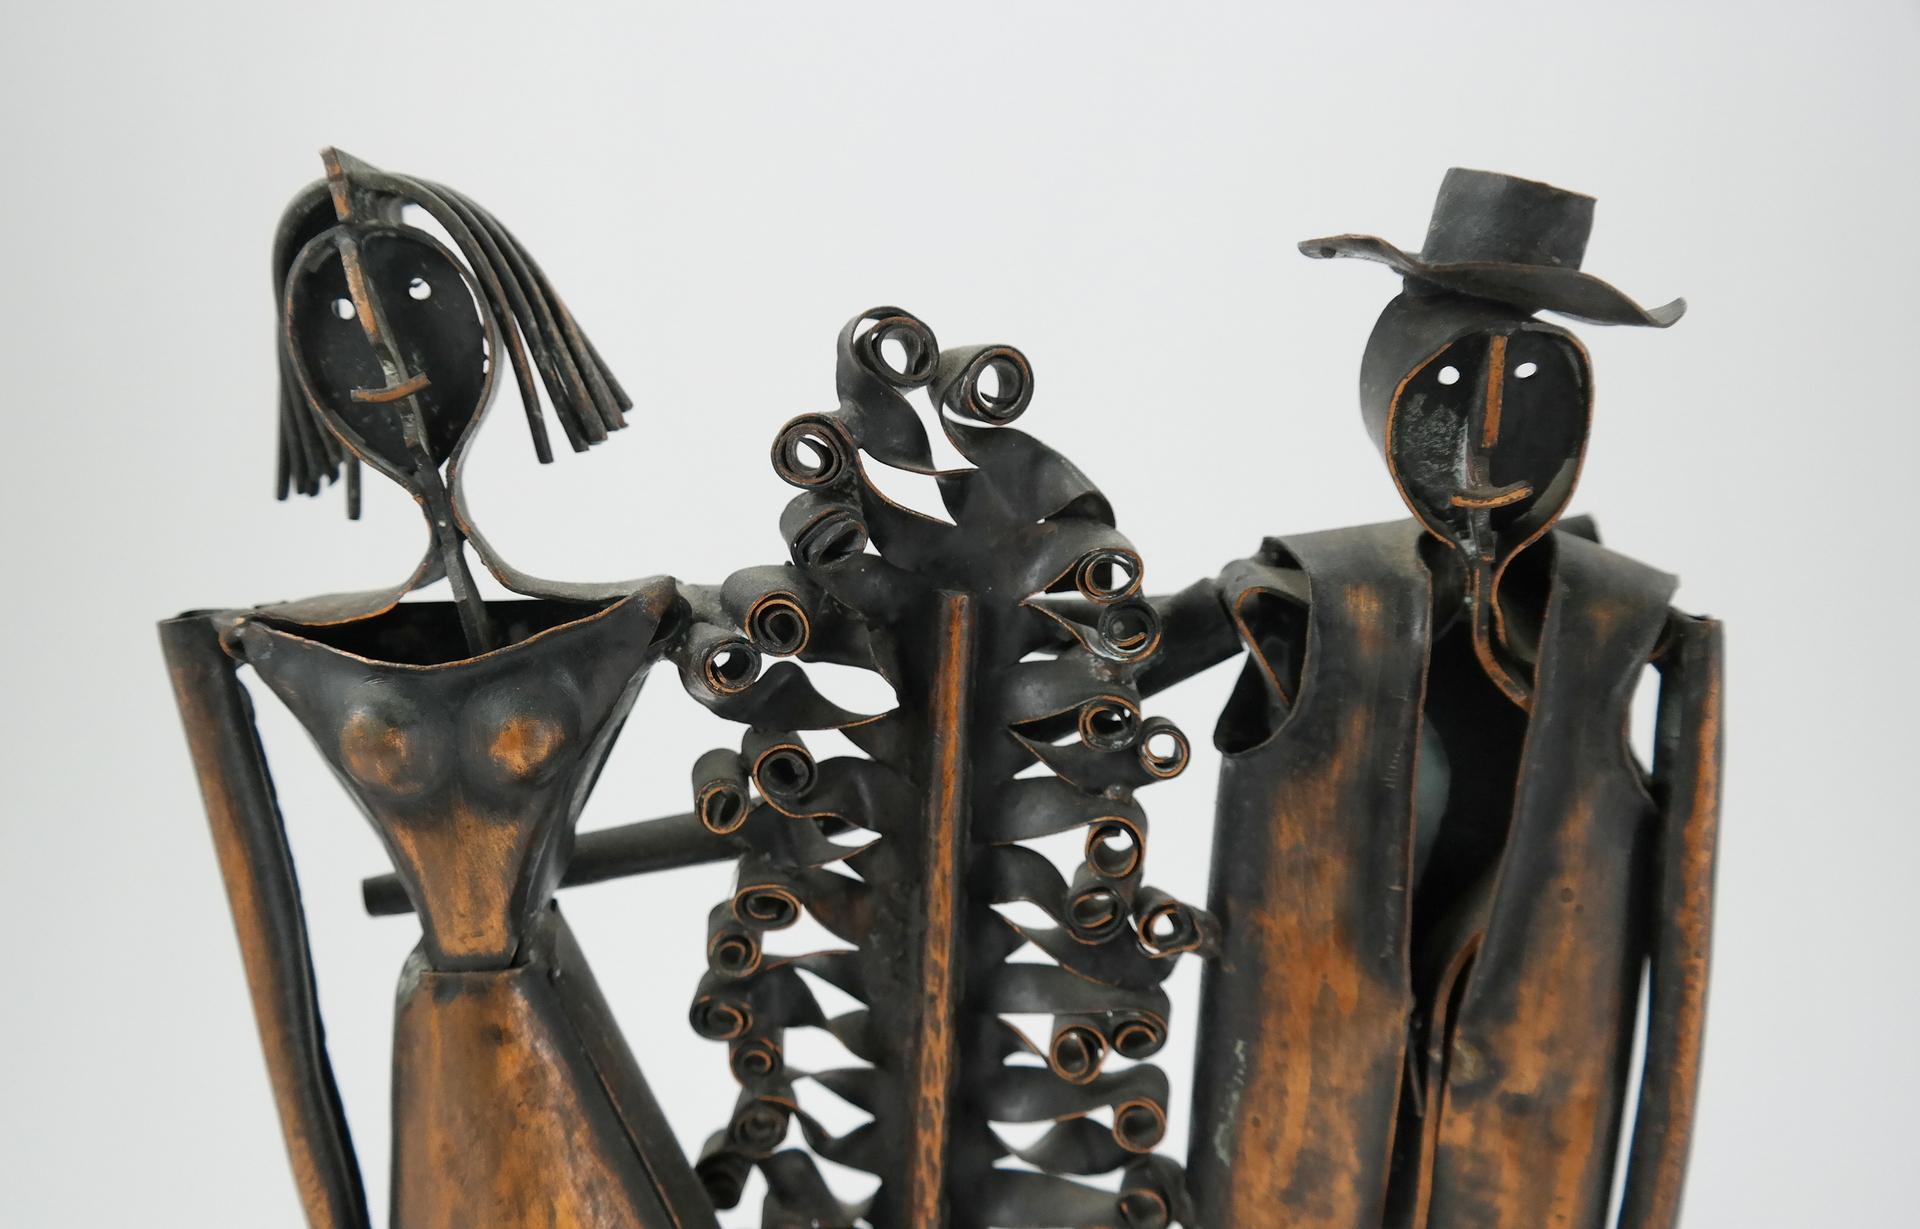 Just Married - Robert Jajesnica Copper Sculpture, 1970s handmade, signed.